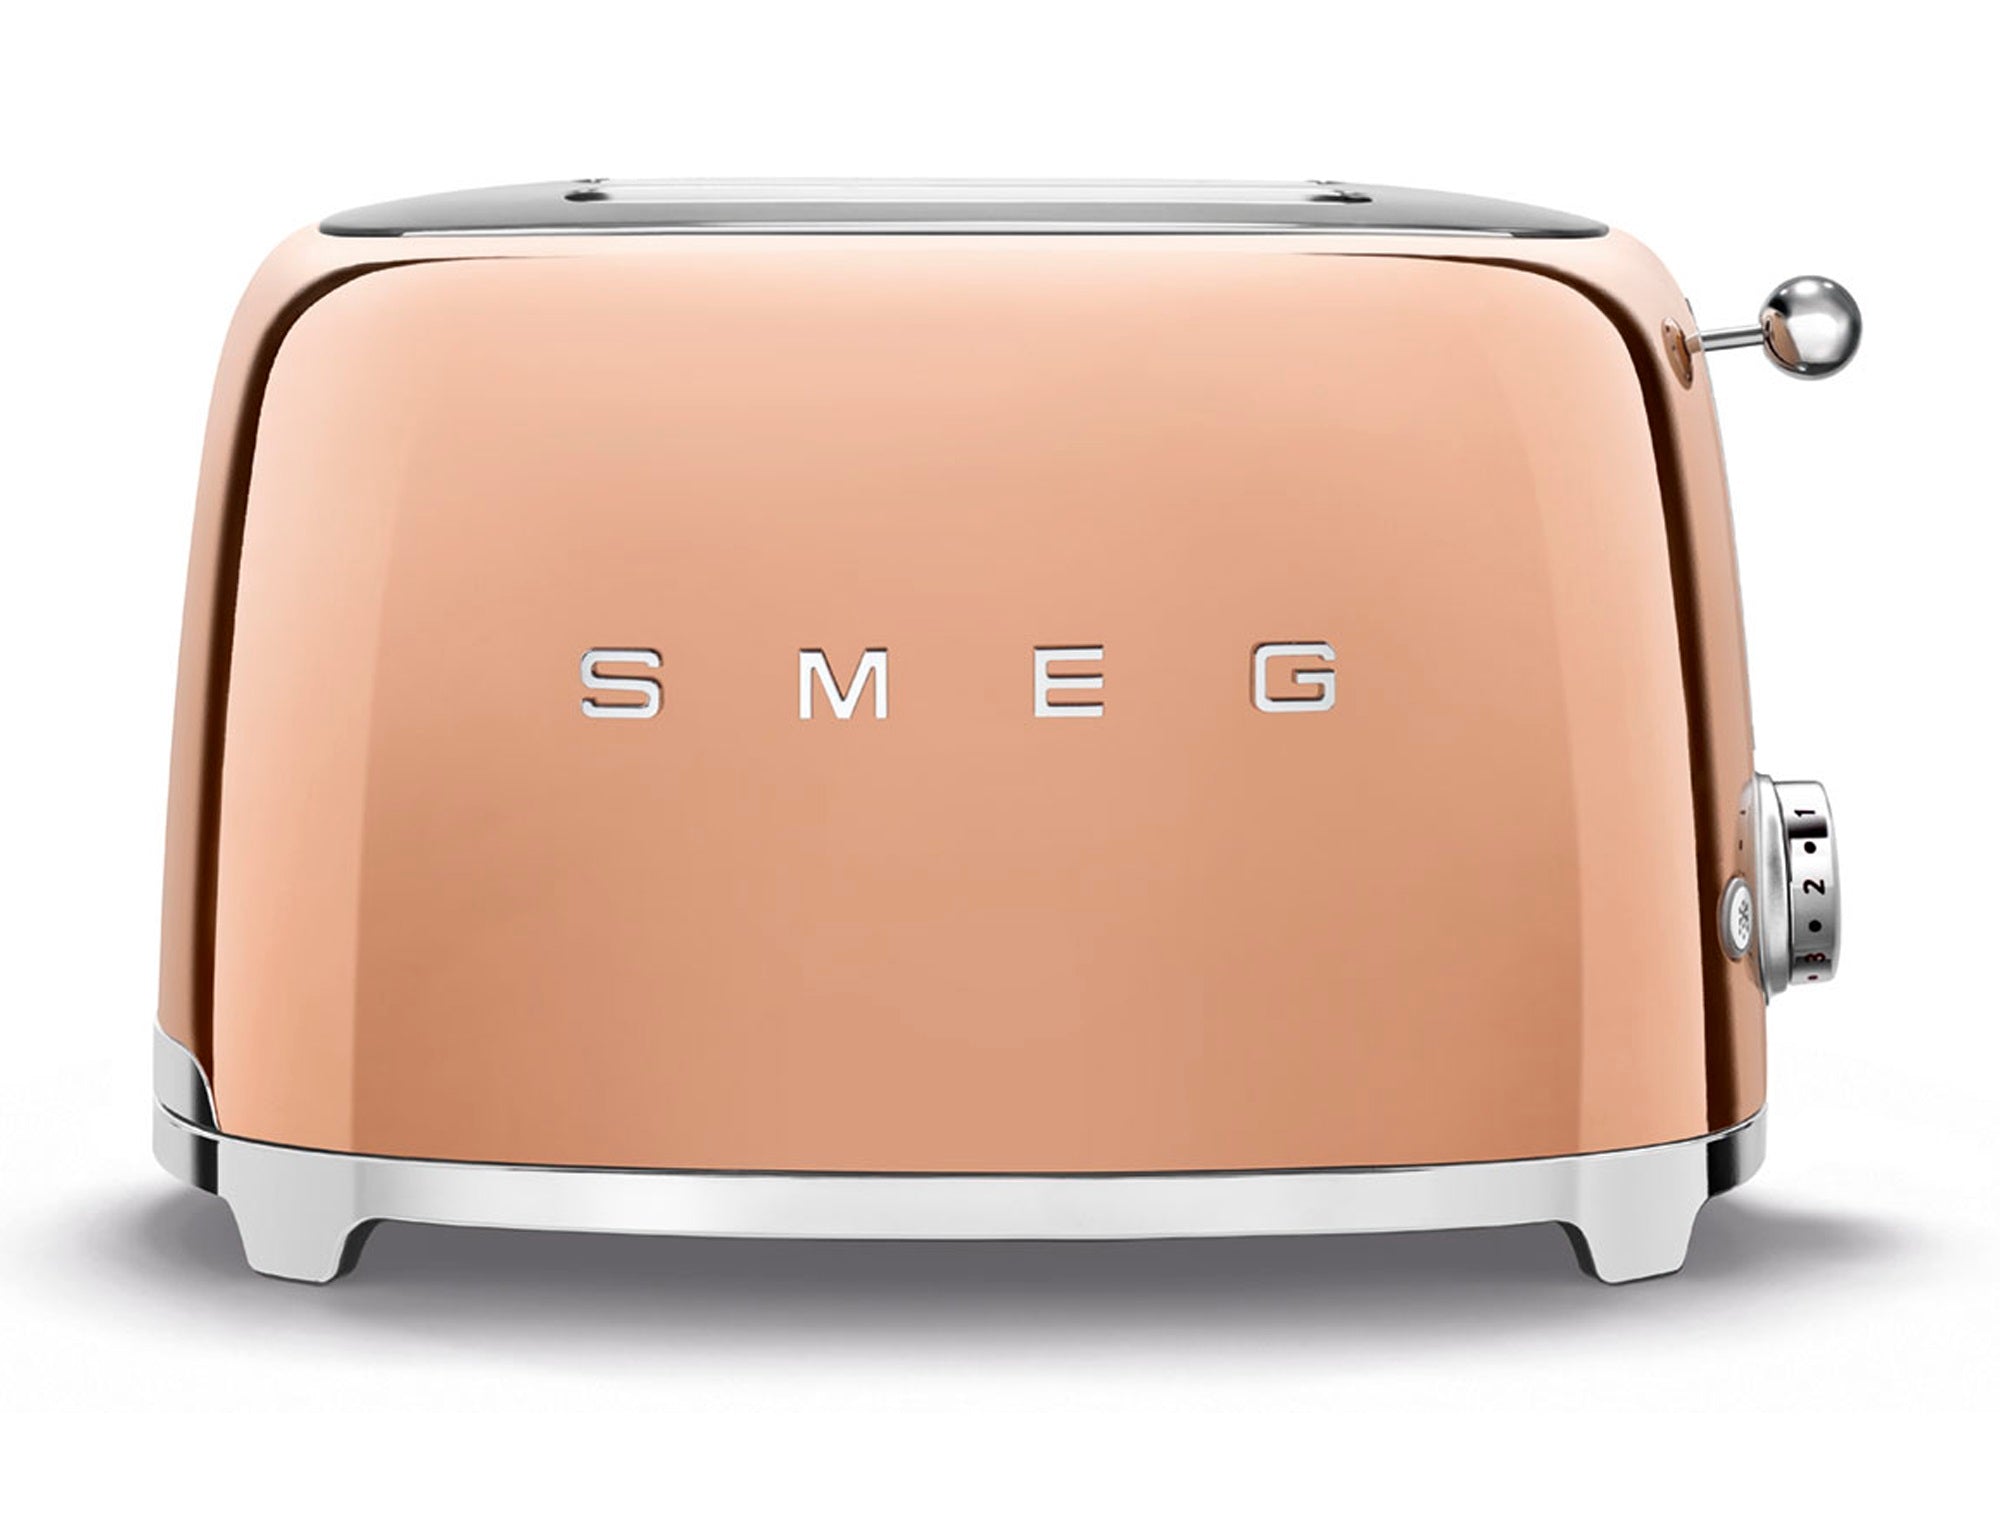 Smeg Toaster 50's Style Aesthetic